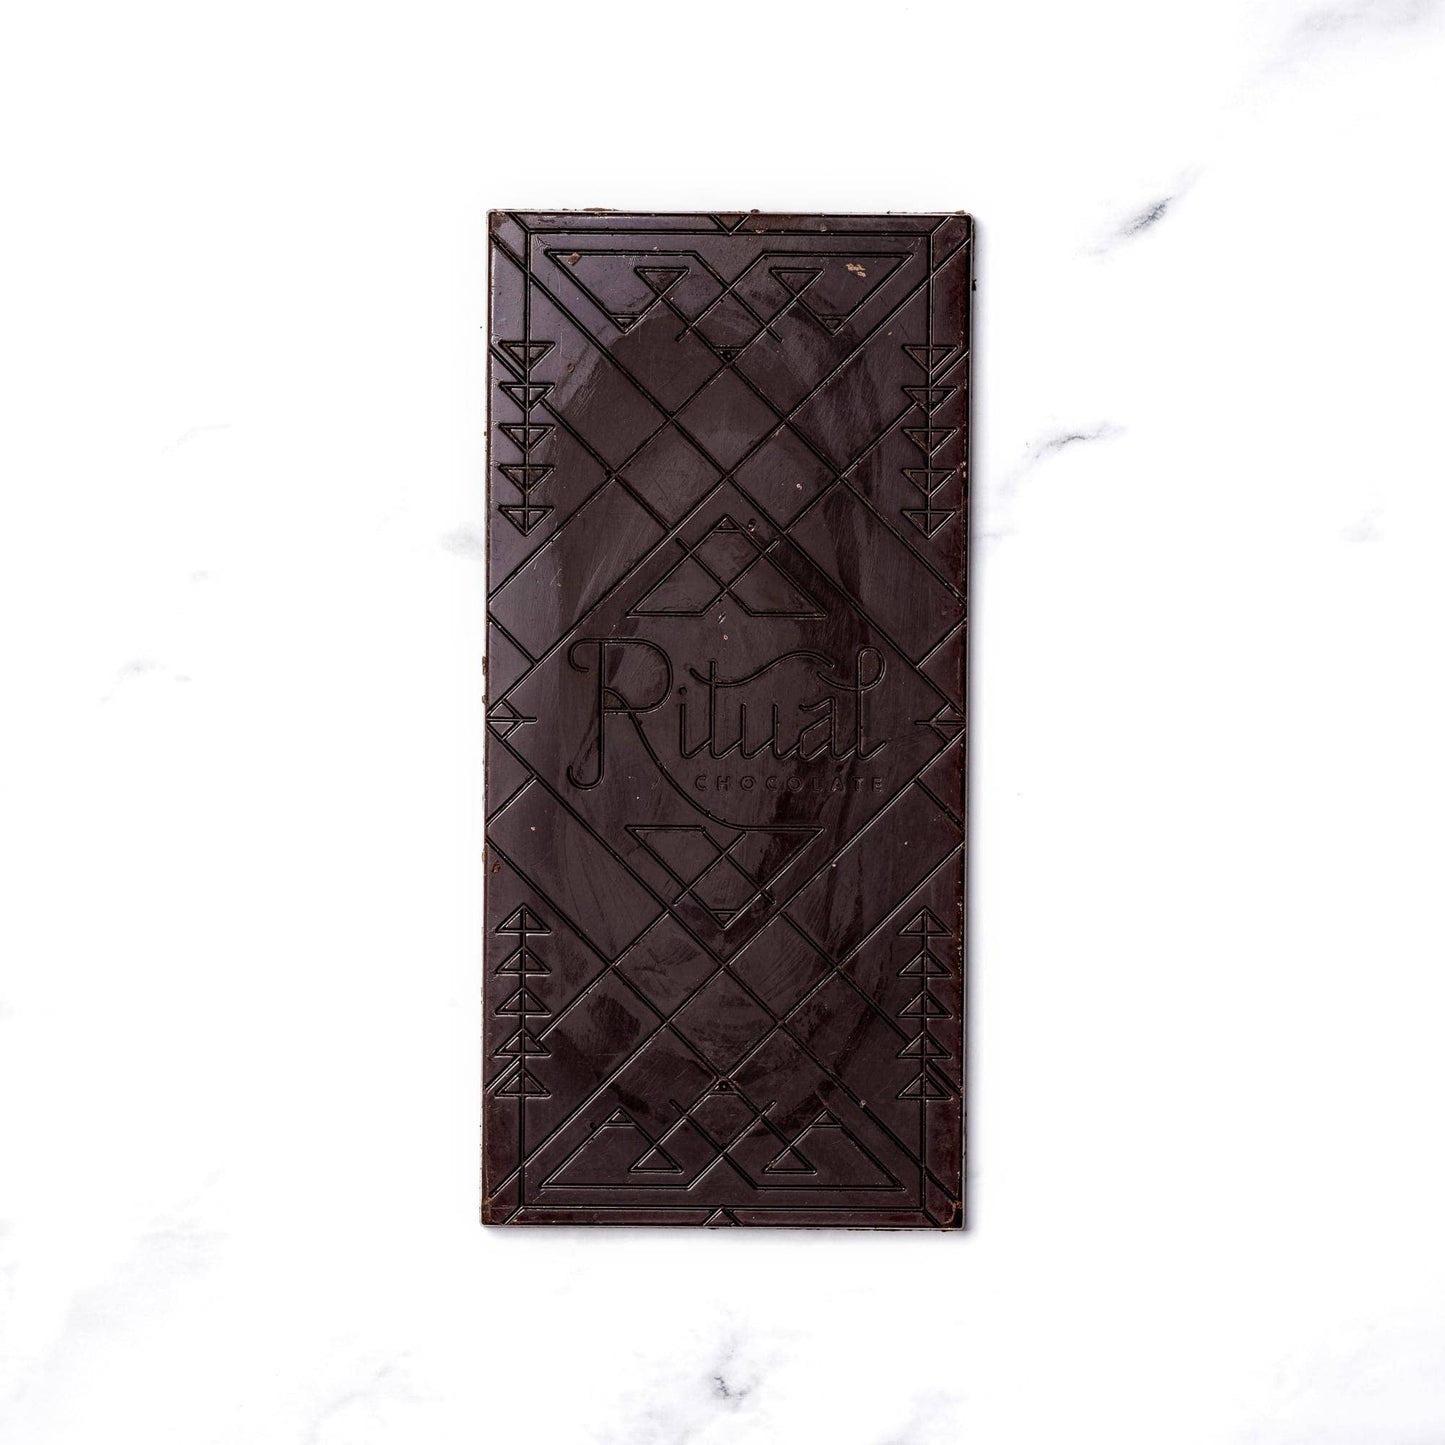 Ritual Chocolate - Juniper Lavender Chocolate, 70% Cacao